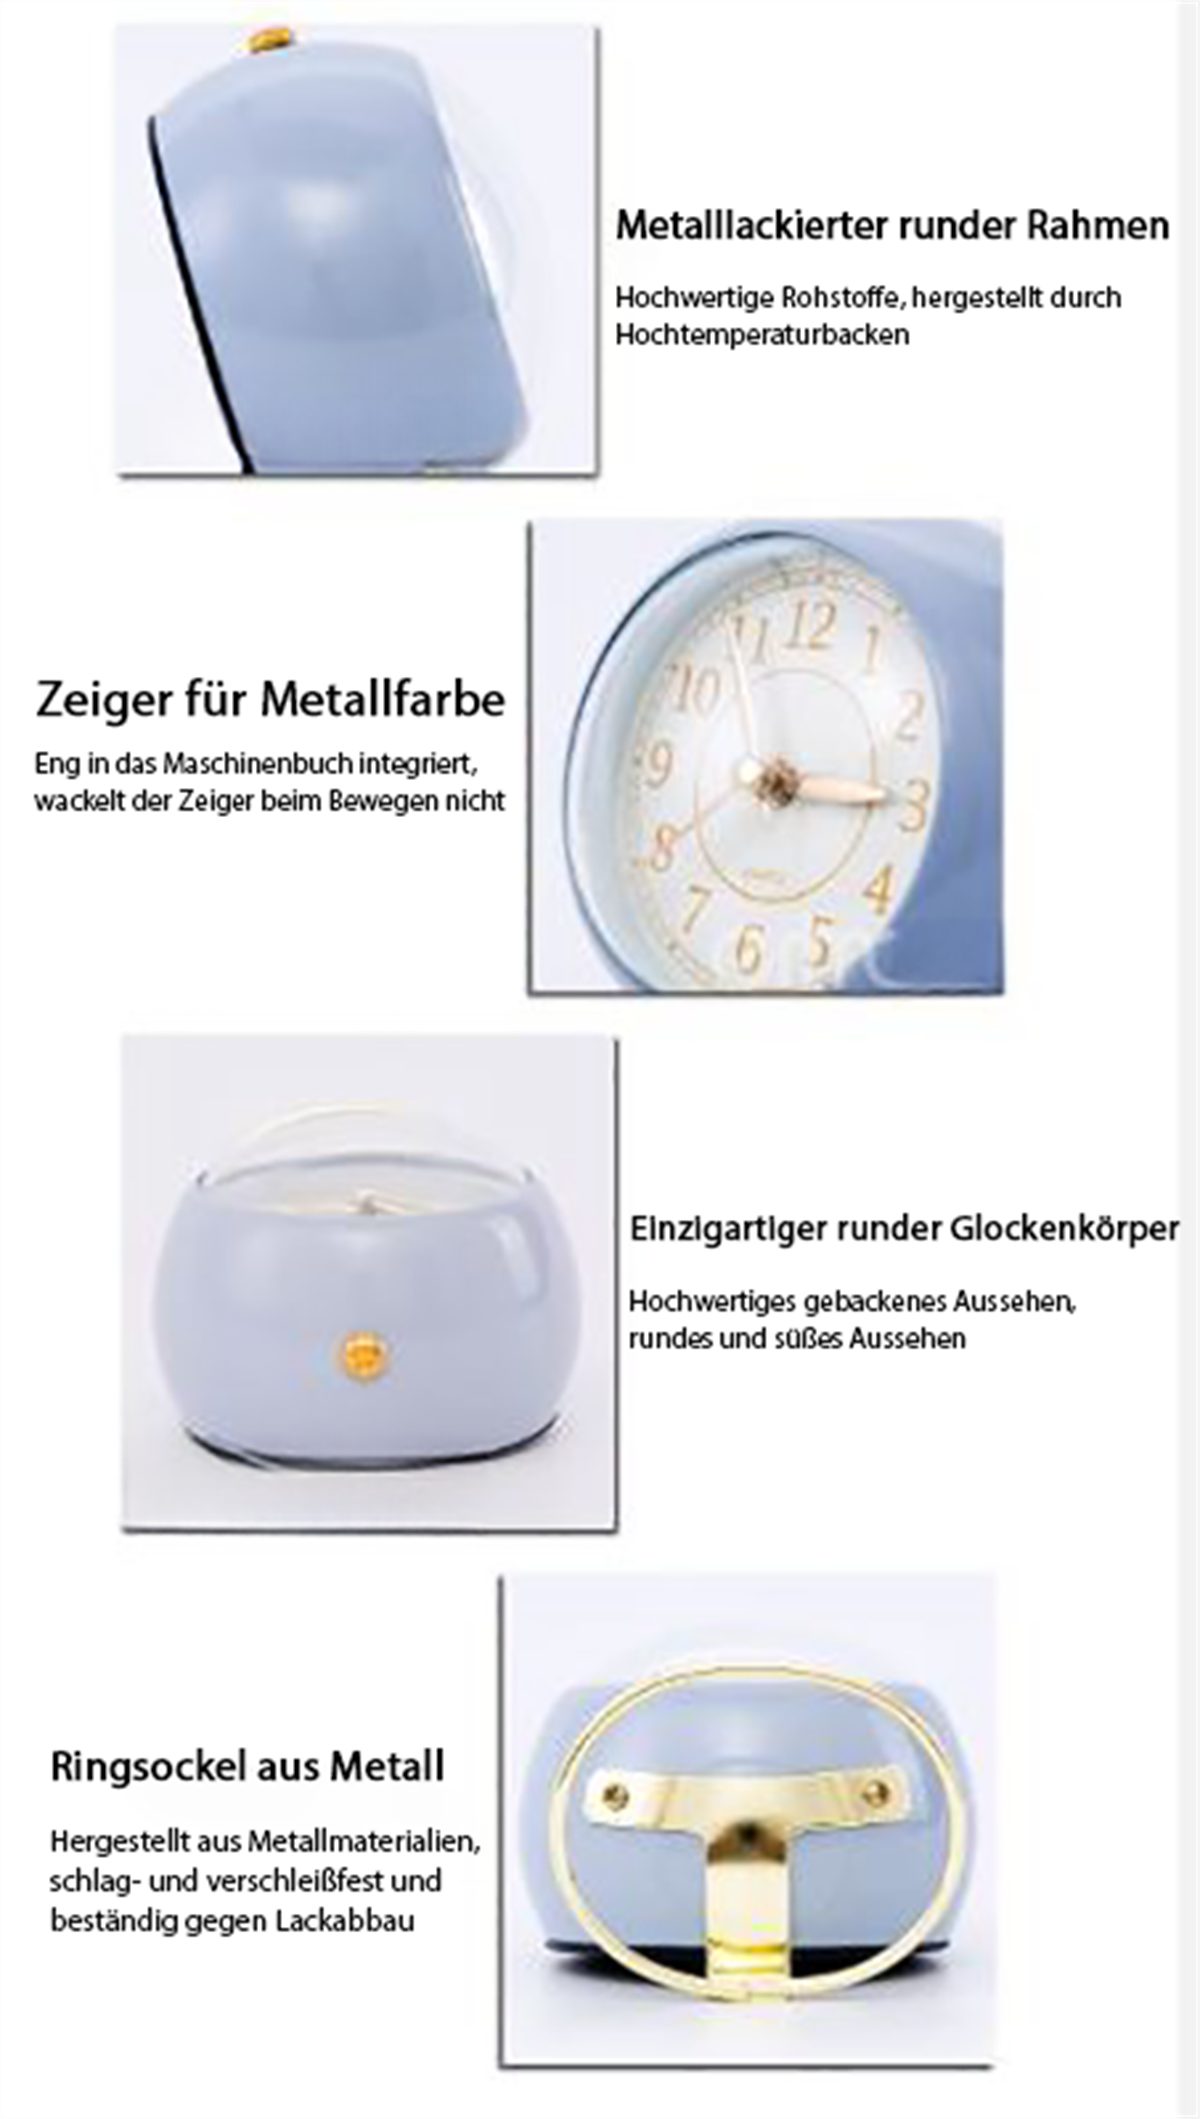 Metall, Leuchtender elektronischer Wecker Wecker Quarzwecker leiser aus Lila selected carefully